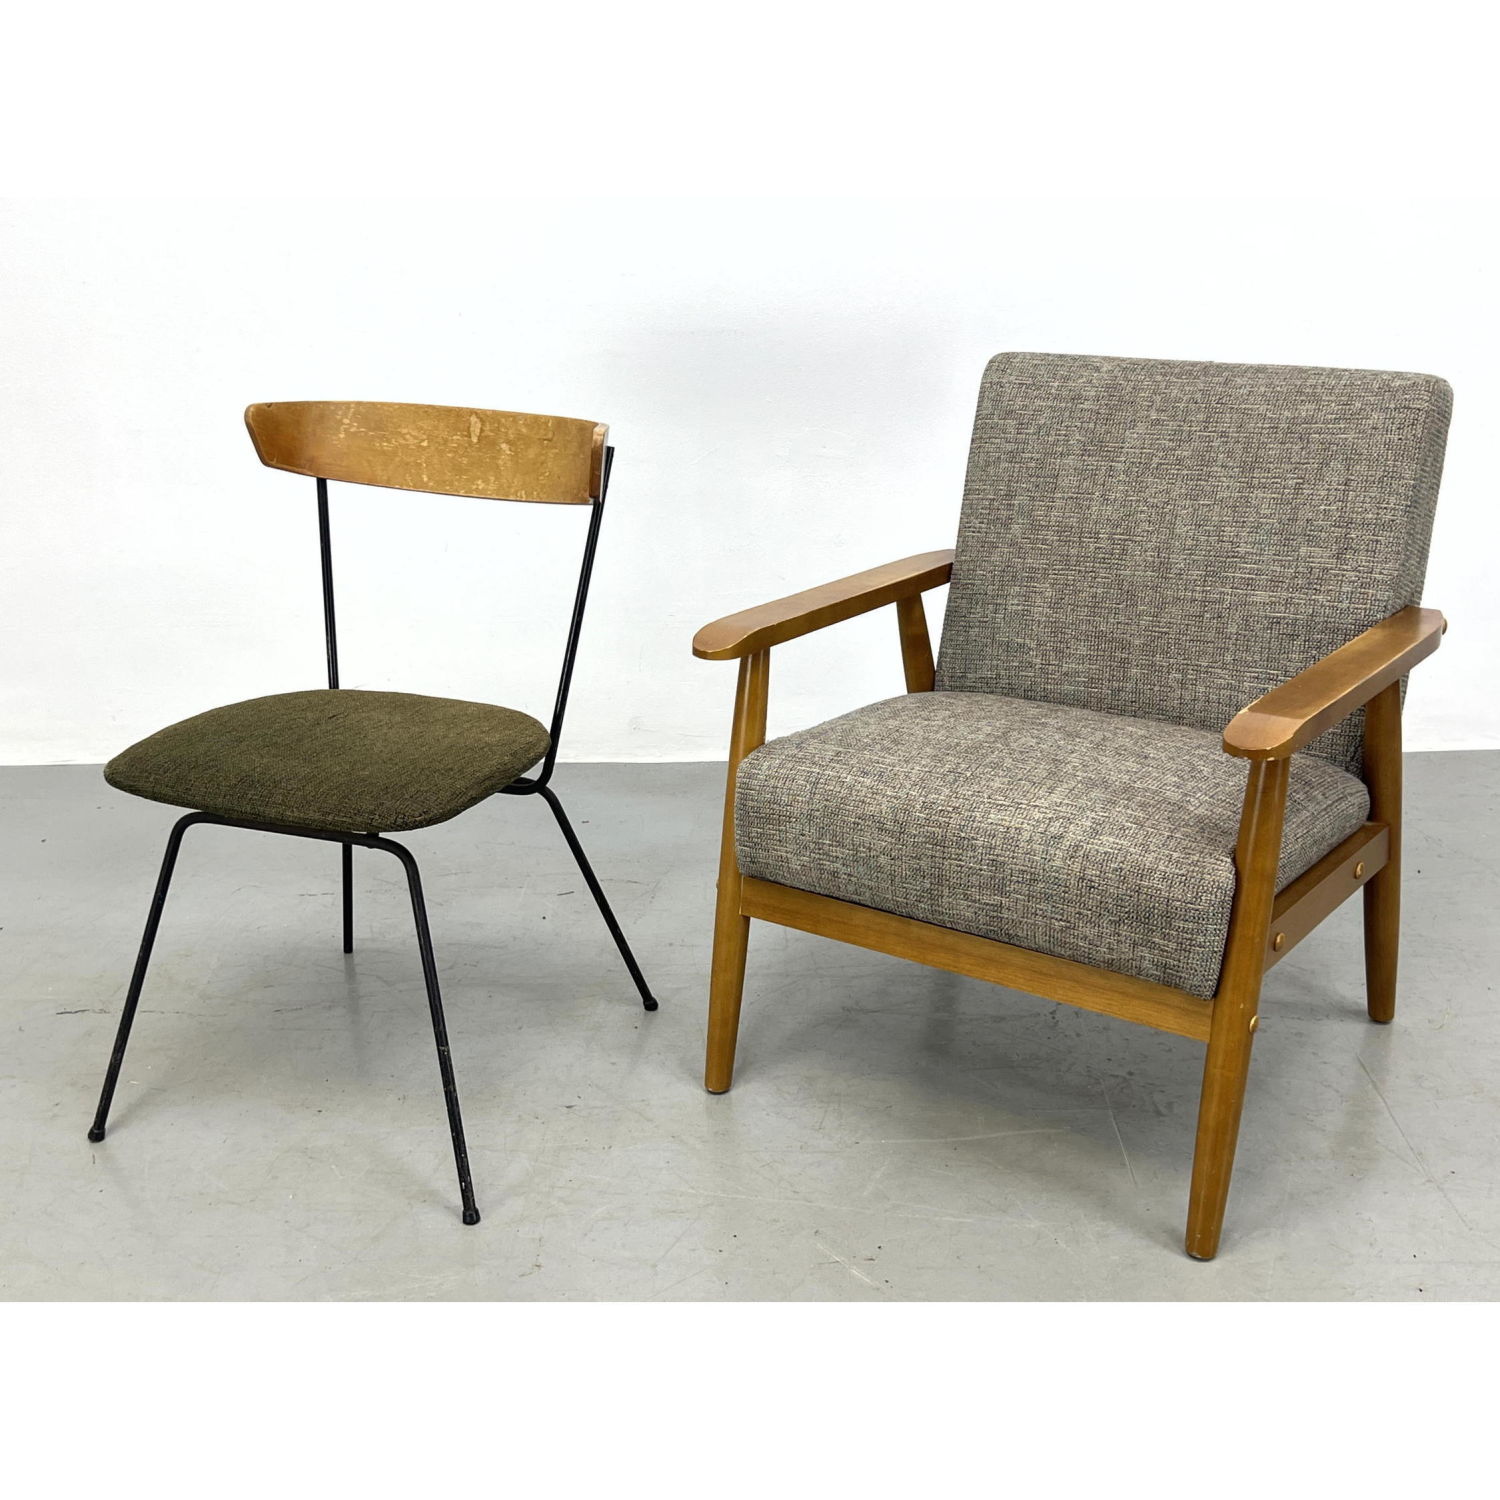 2pc American Modern Chairs. CLIFFORD